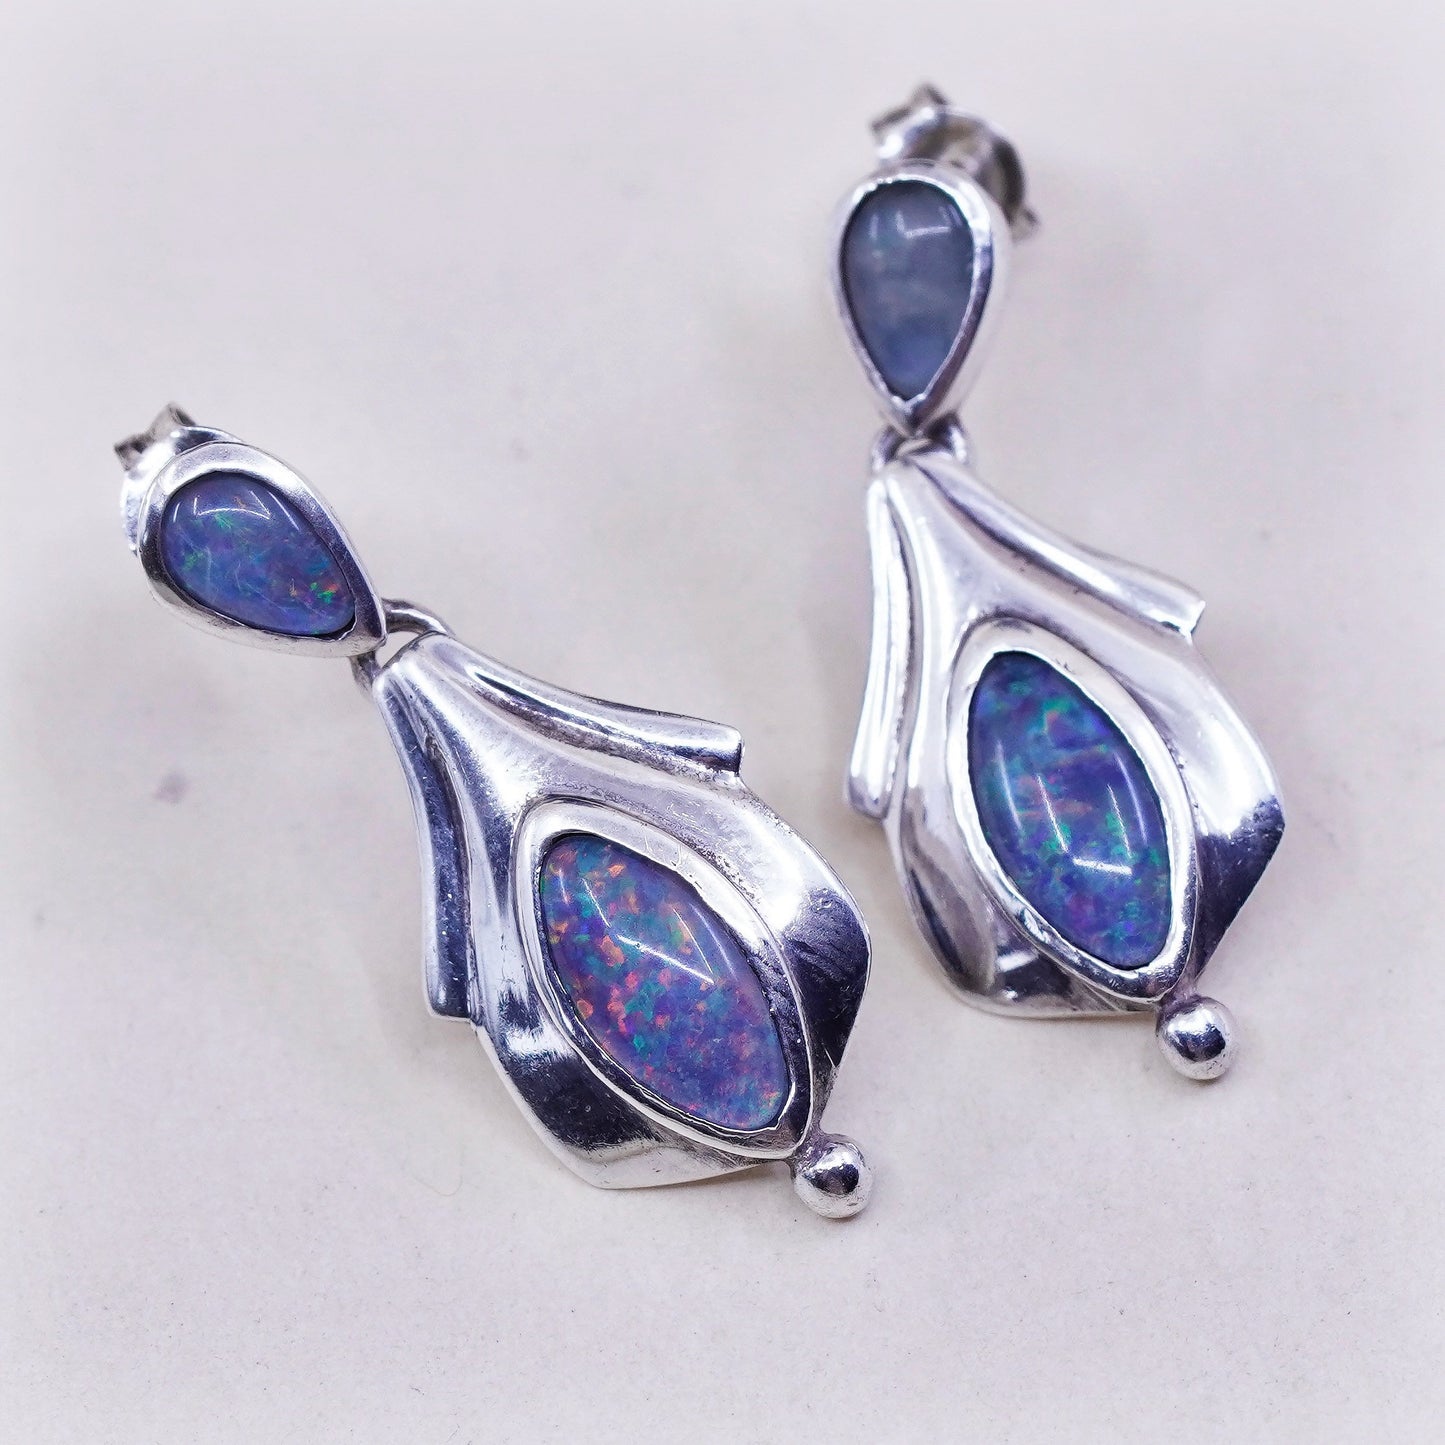 Vintage Sterling silver handmade earrings, 925 studs with opal dangles